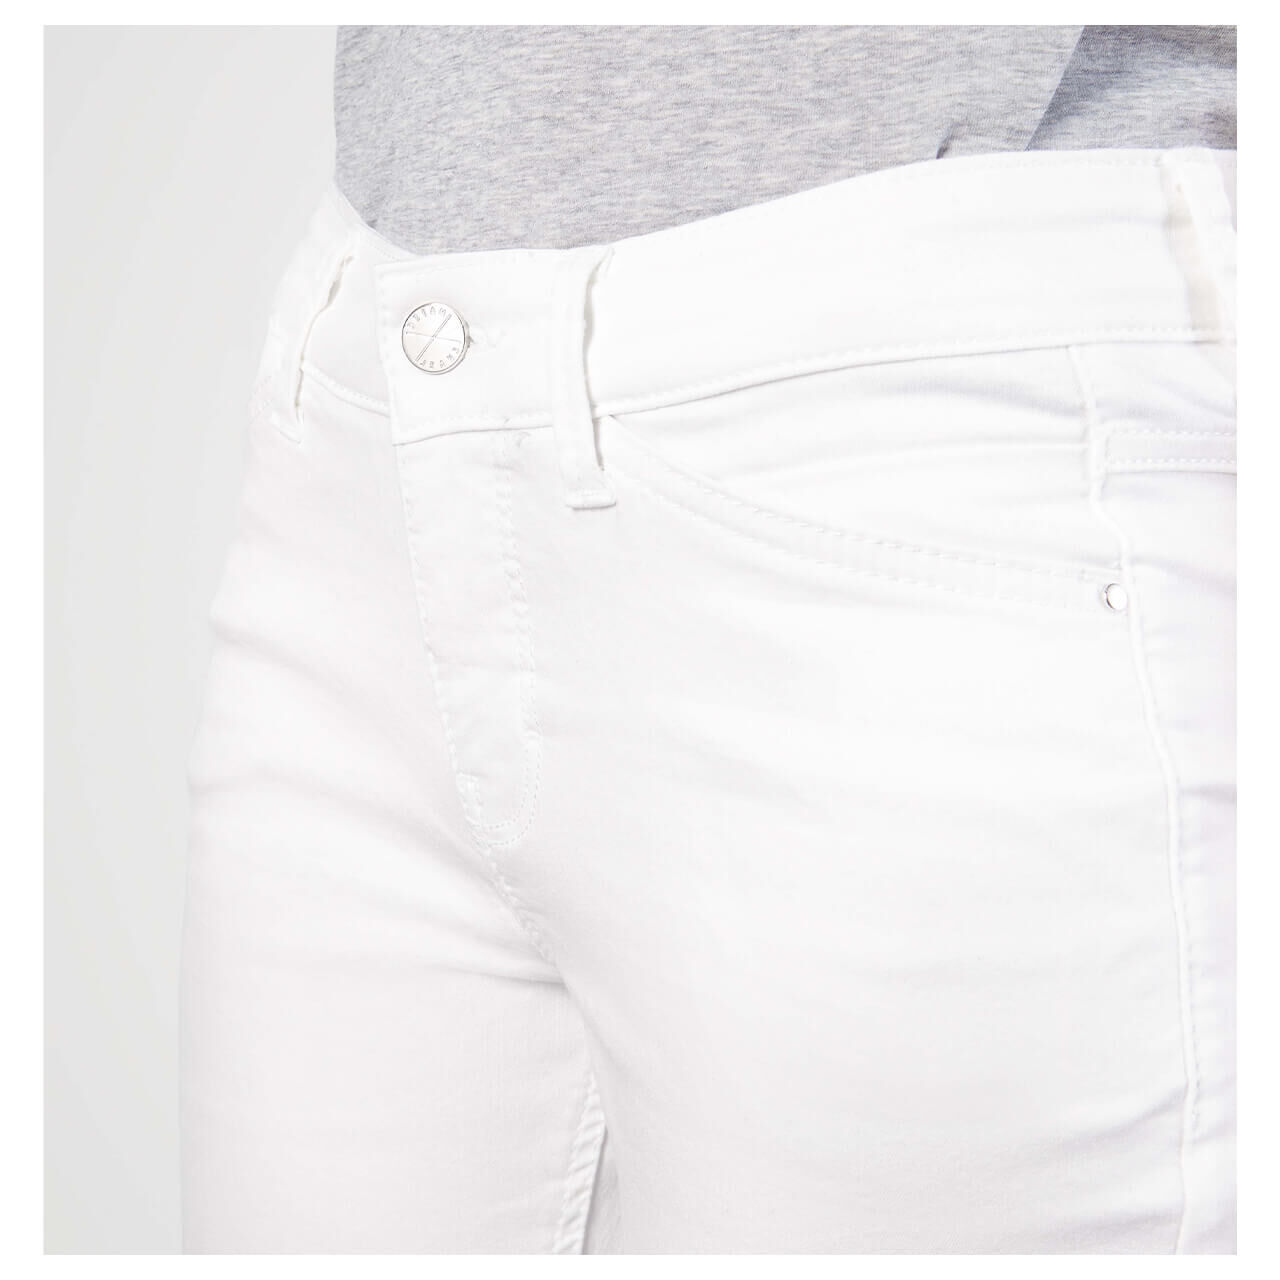 MAC Dream Chic 7/8 Jeans white